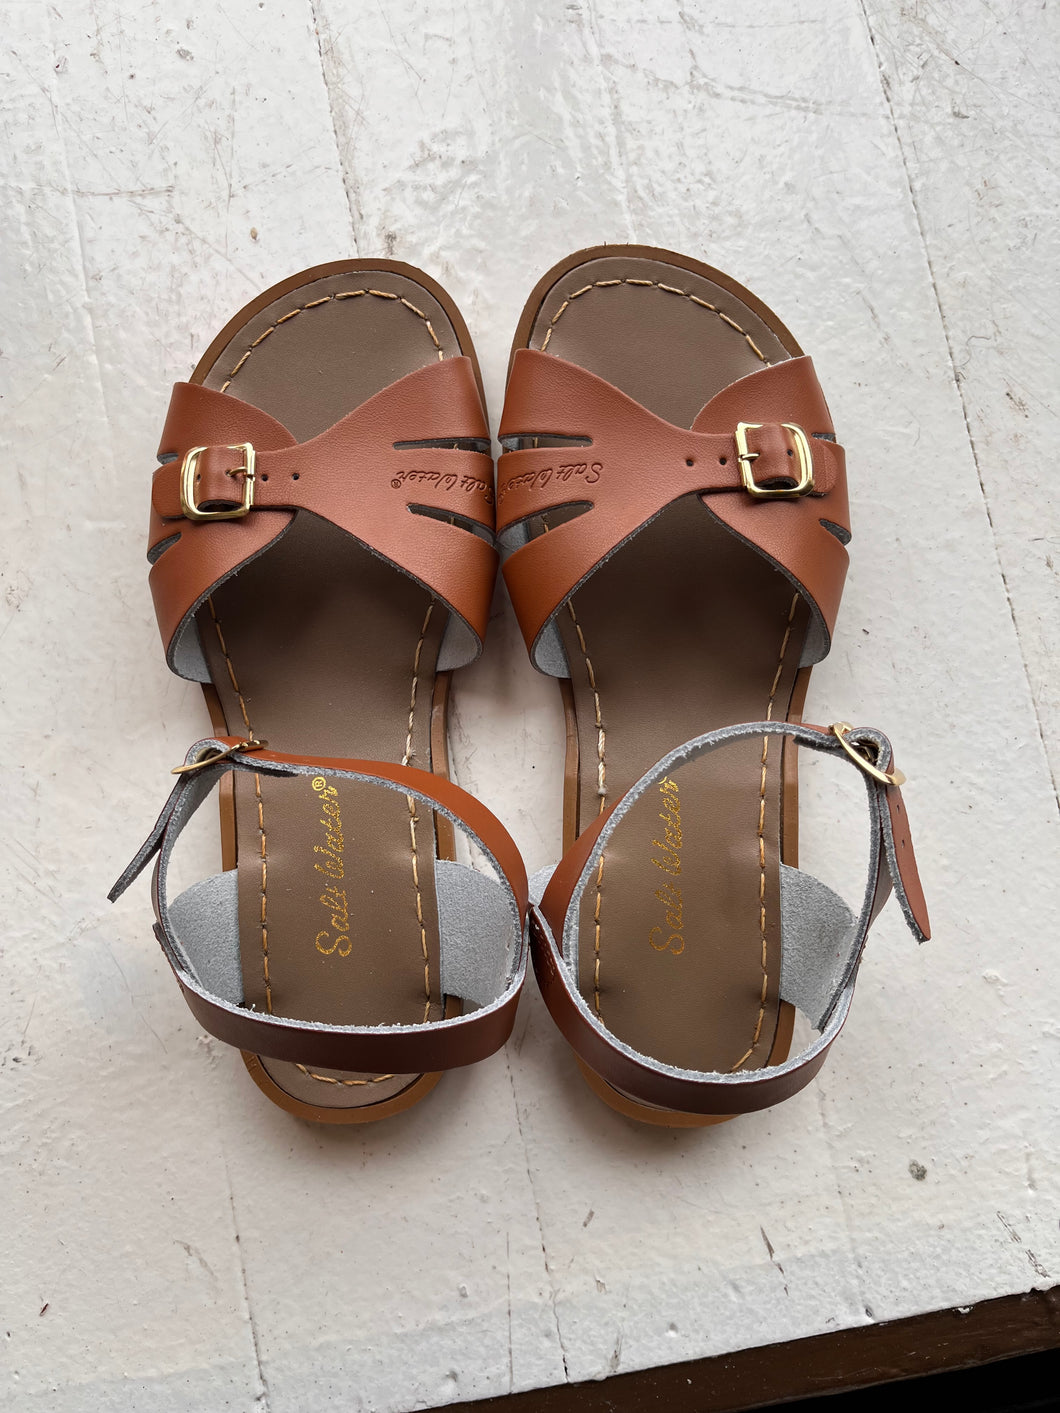 Salt Water Classic Sandal in Tan